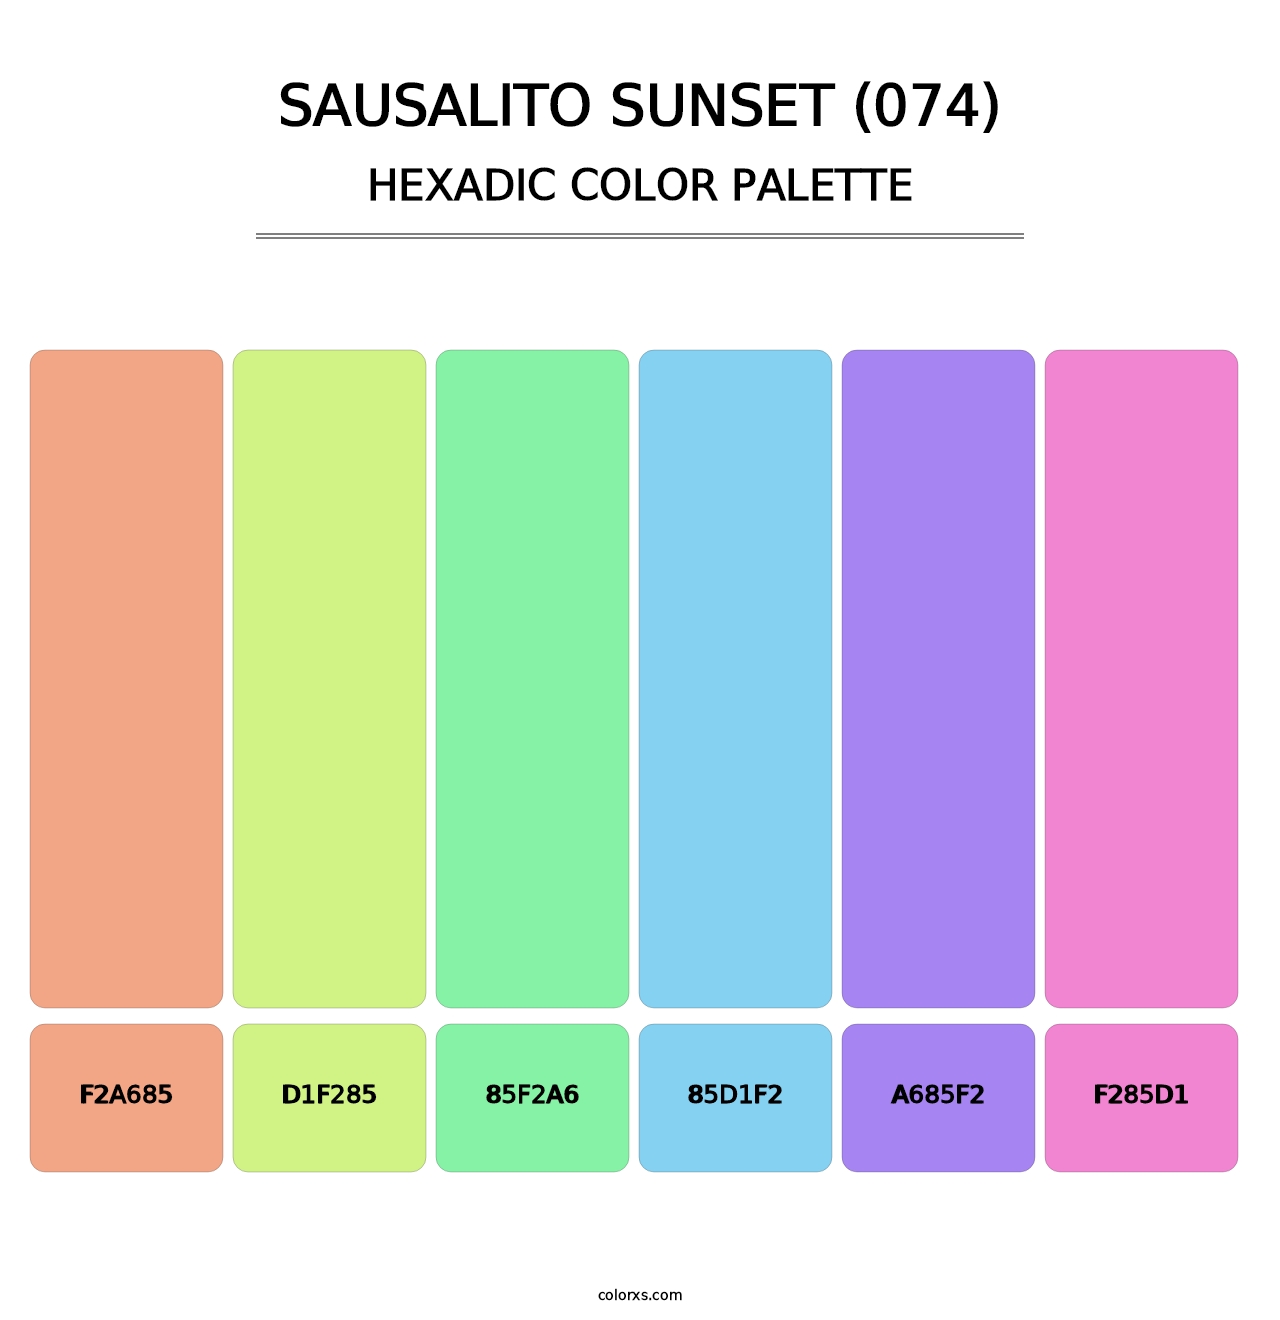 Sausalito Sunset (074) - Hexadic Color Palette